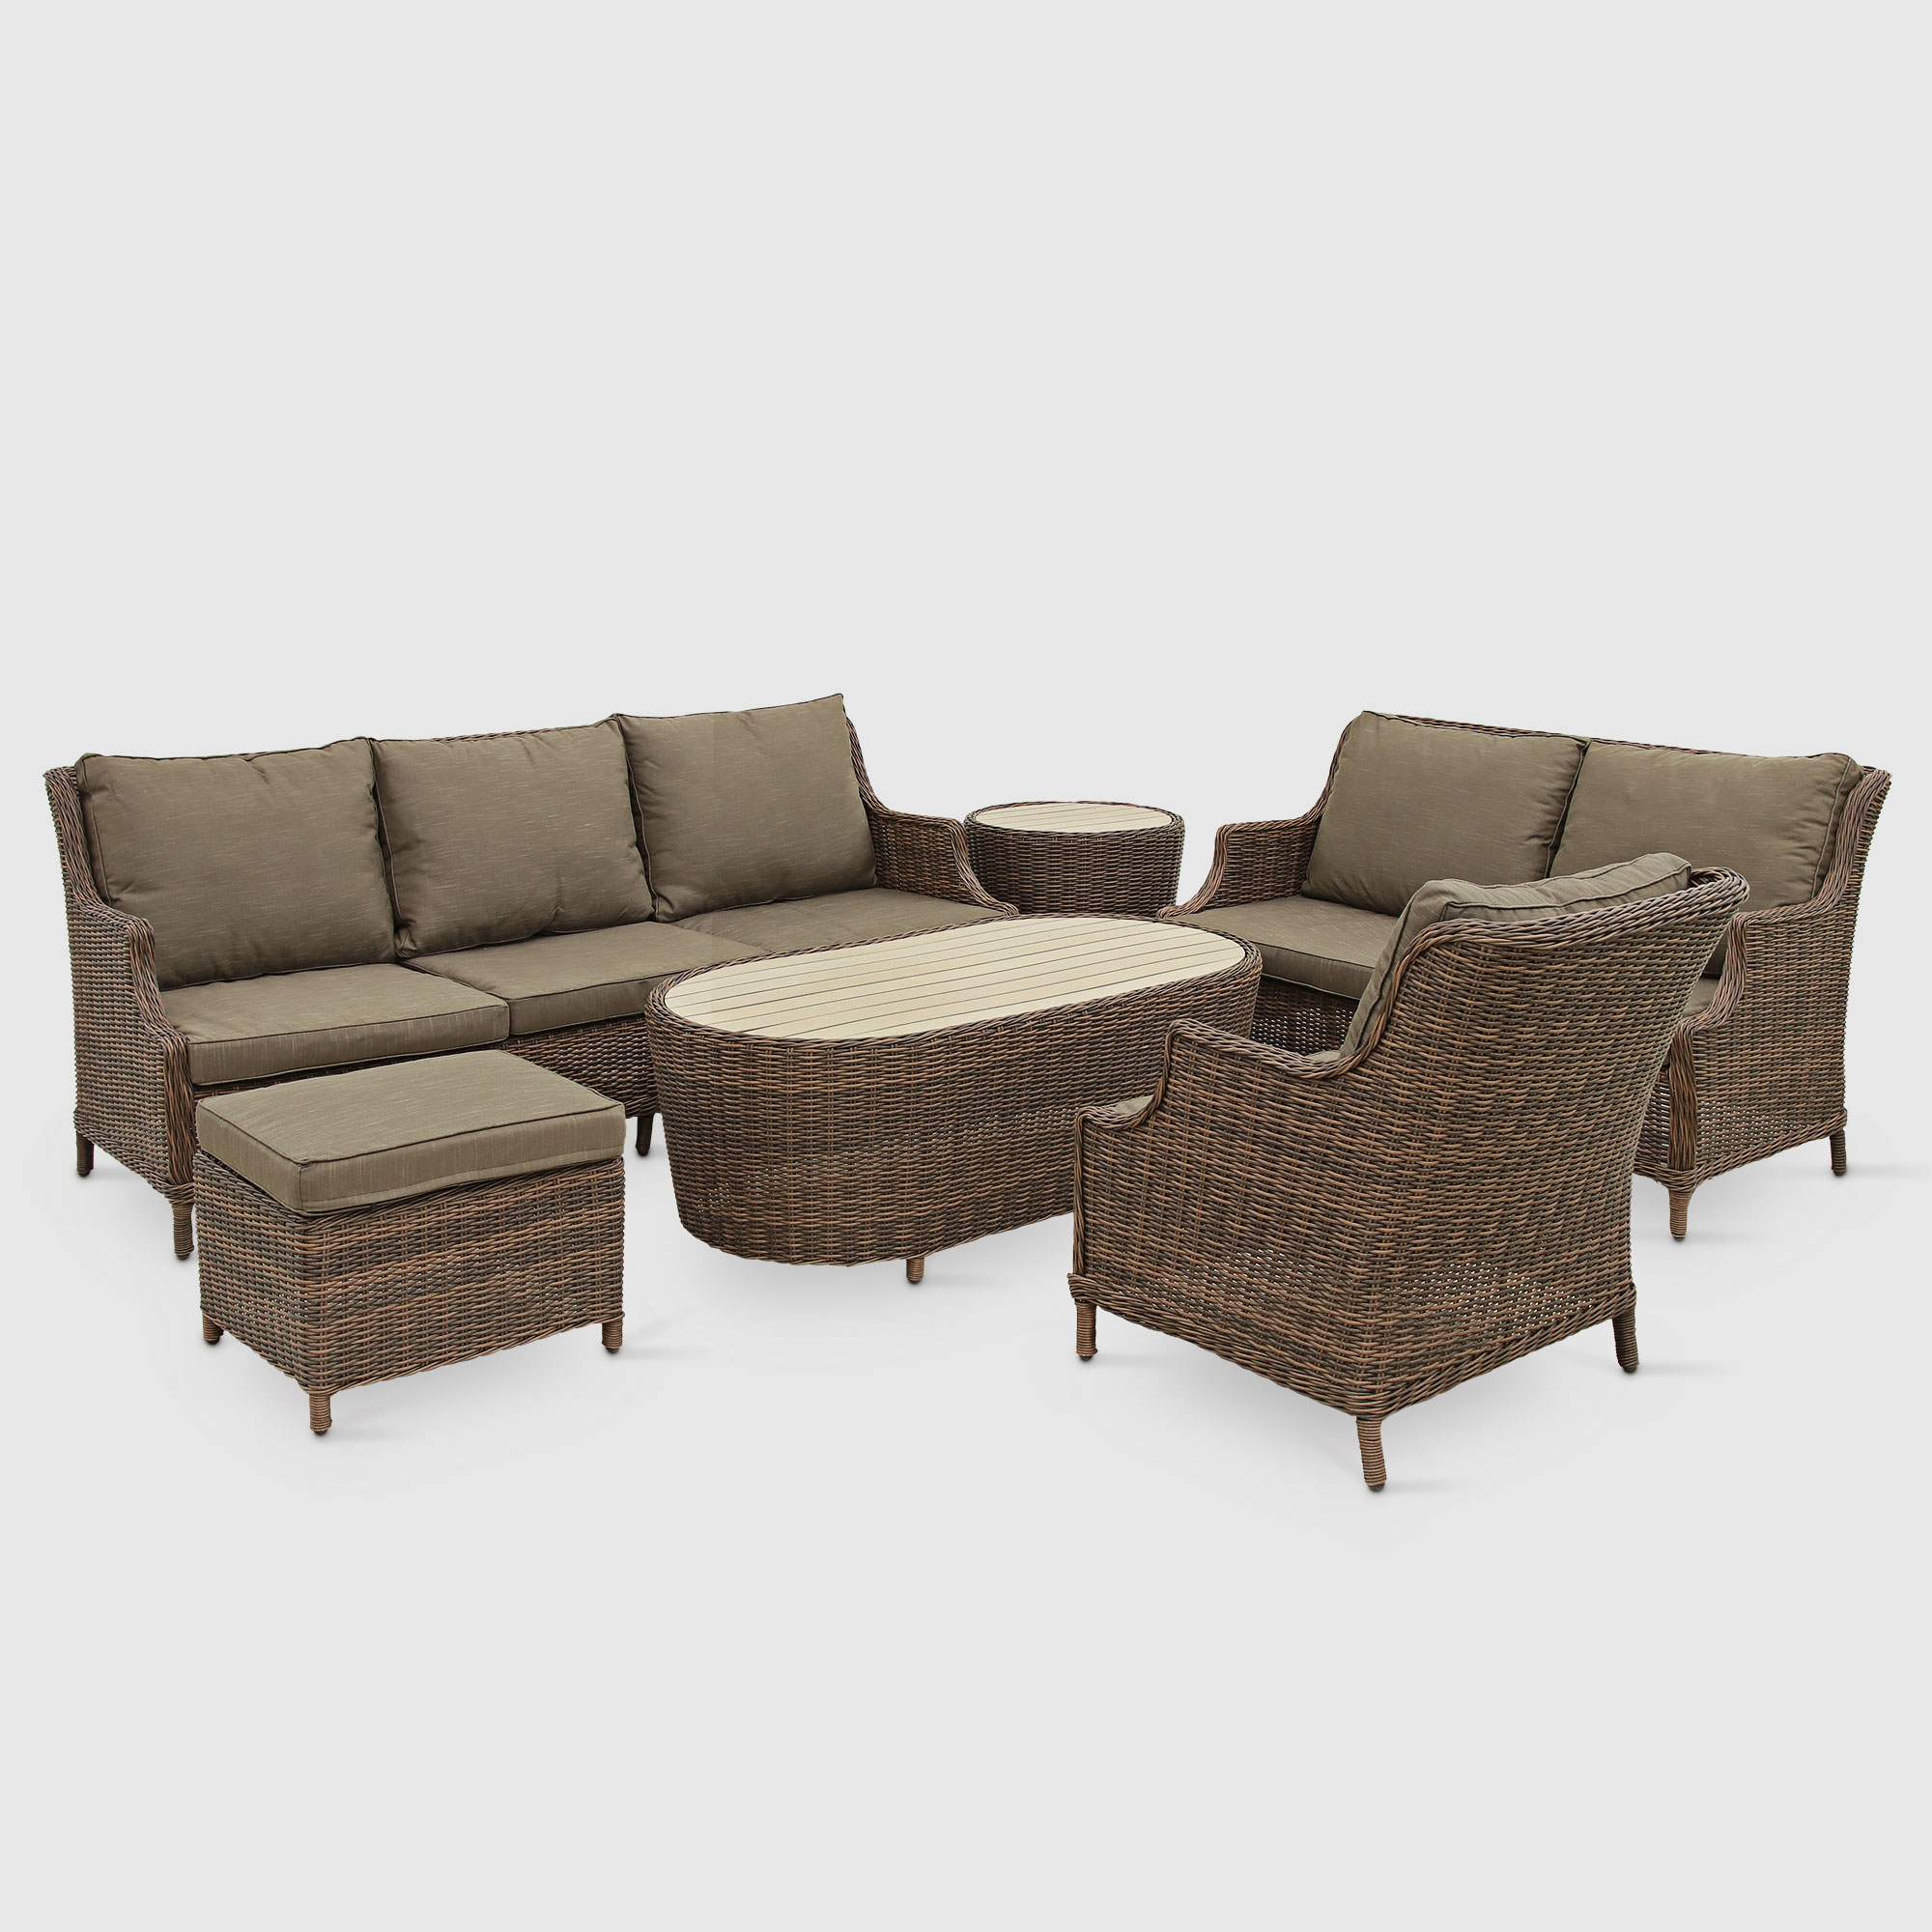 Комплект мебели Yuhang кресло + оттоманка + 2 софы + 2 стола, цвет серо-коричневый, размер 150х86х89; 208х80х87 - фото 1